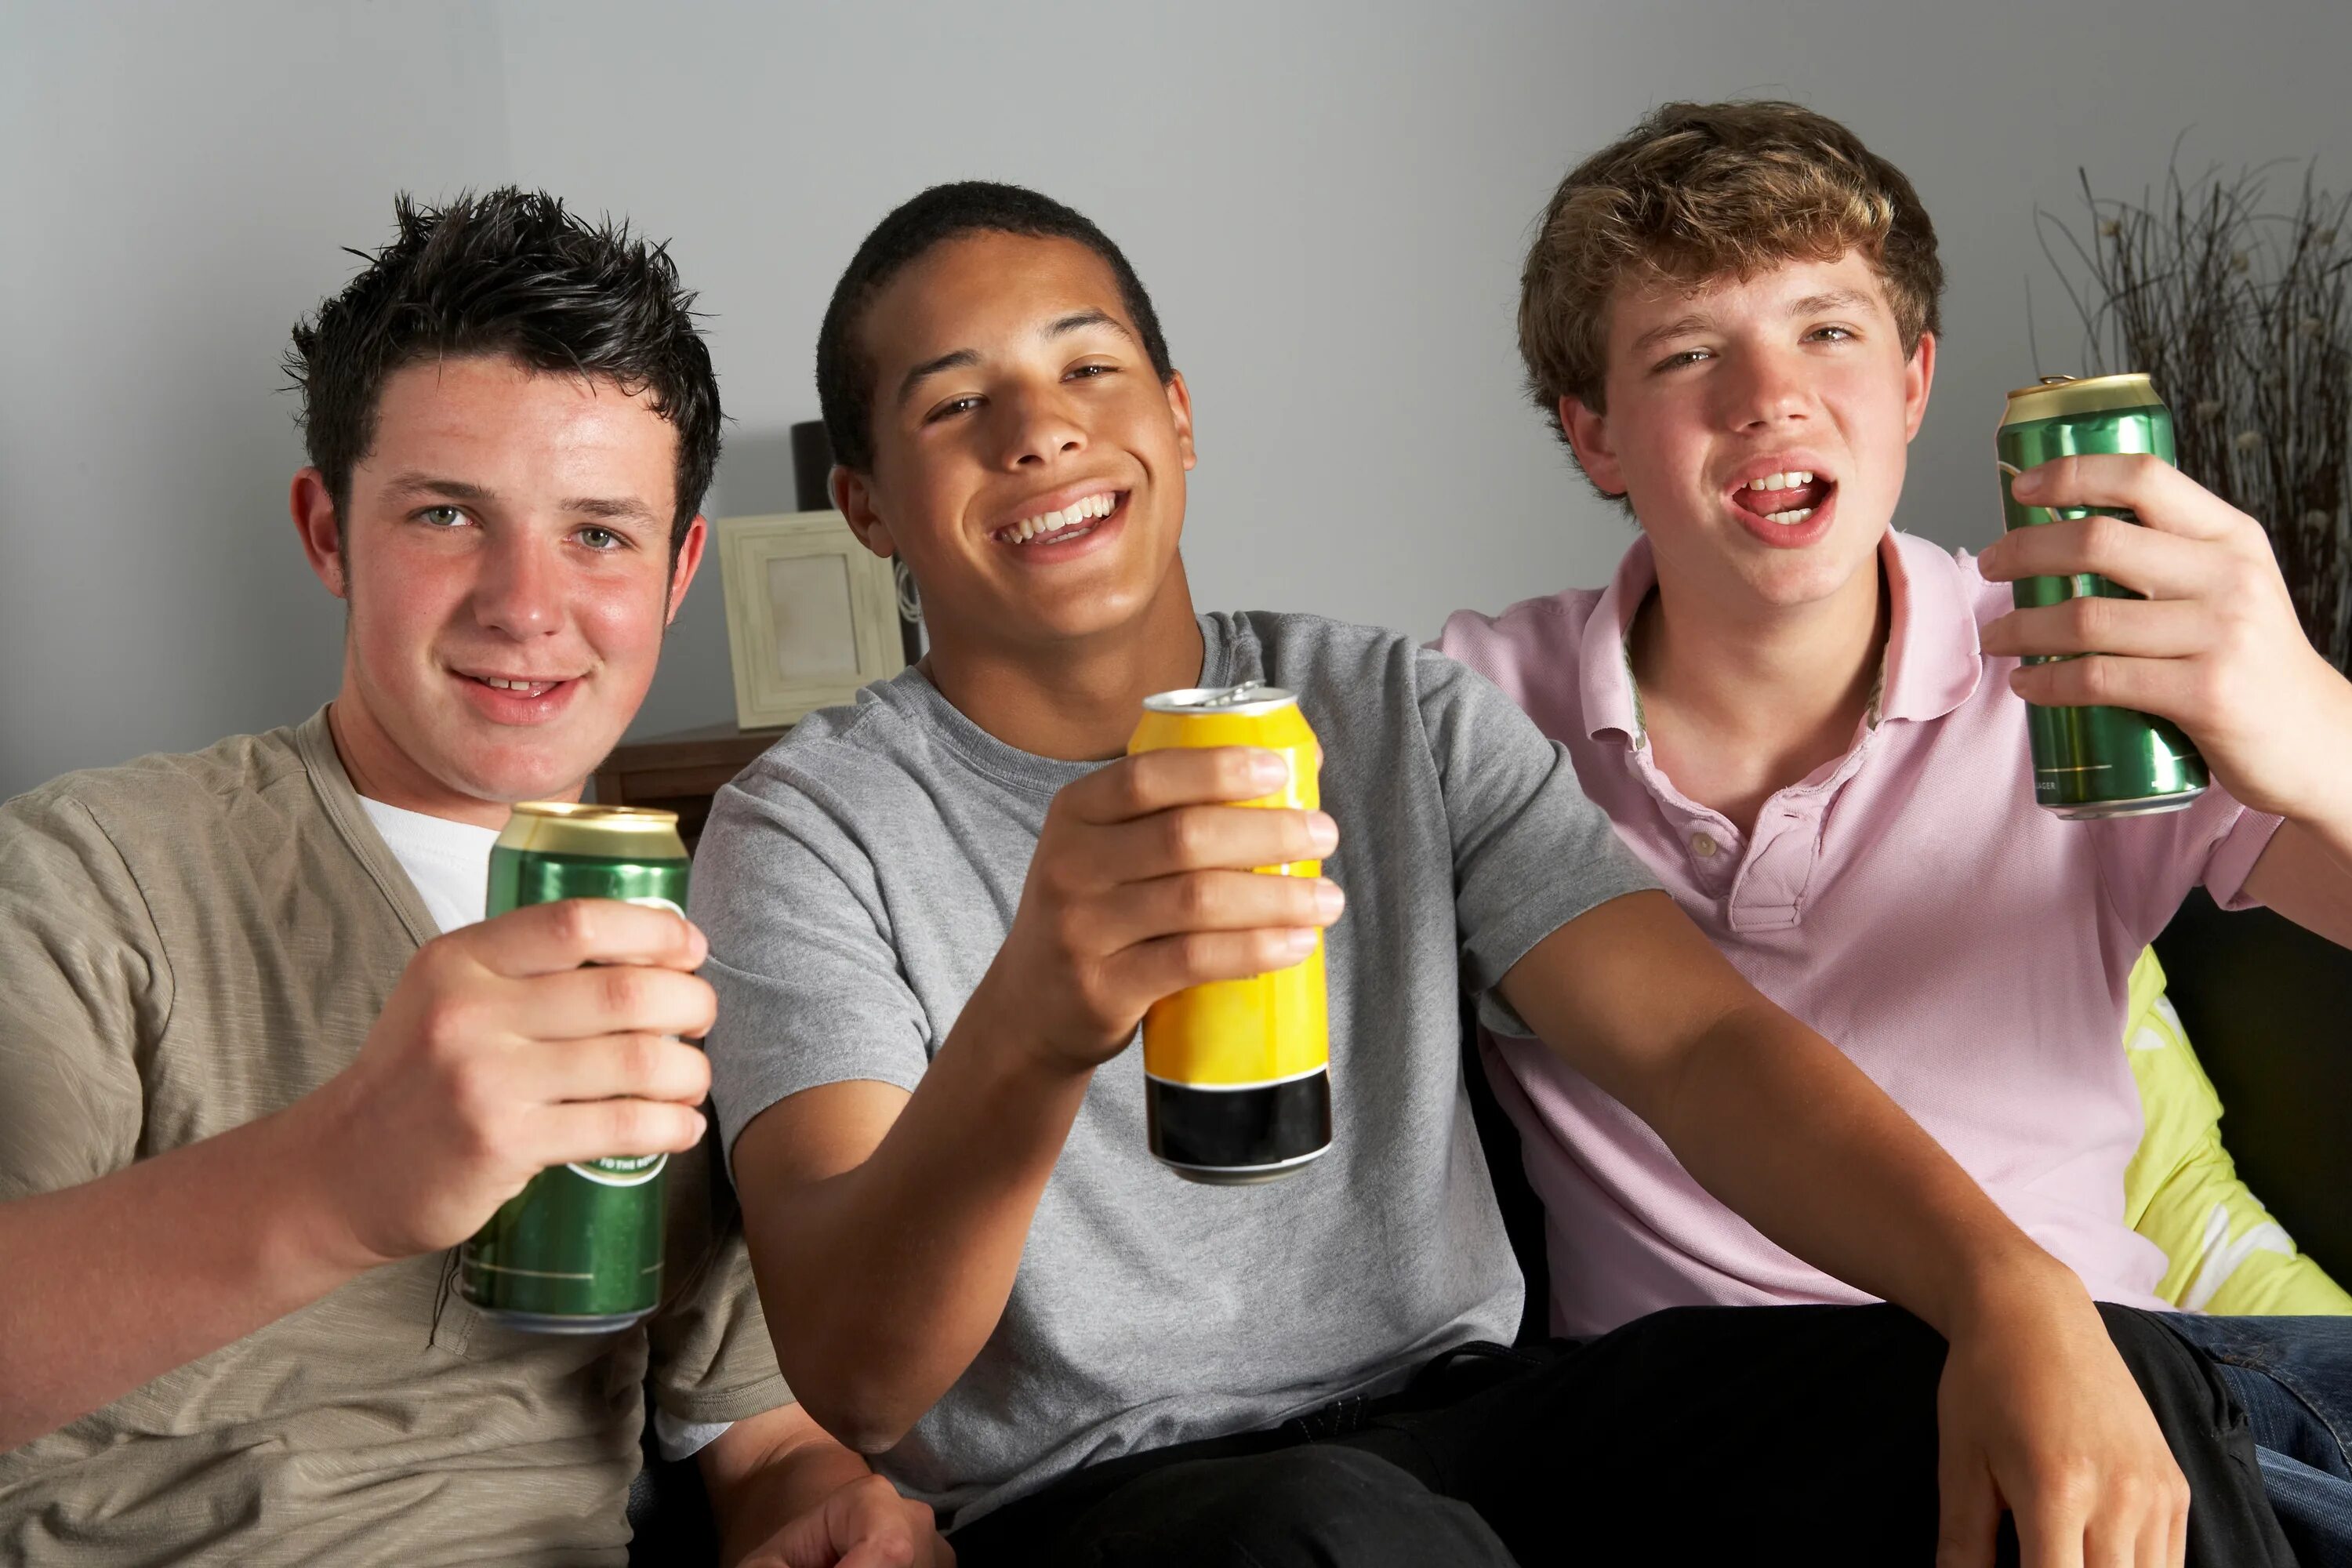 Without drinking. Молодежь с пивом. Алкоголь и молодежь. Молодежь пьет пиво. Студенты пьют.